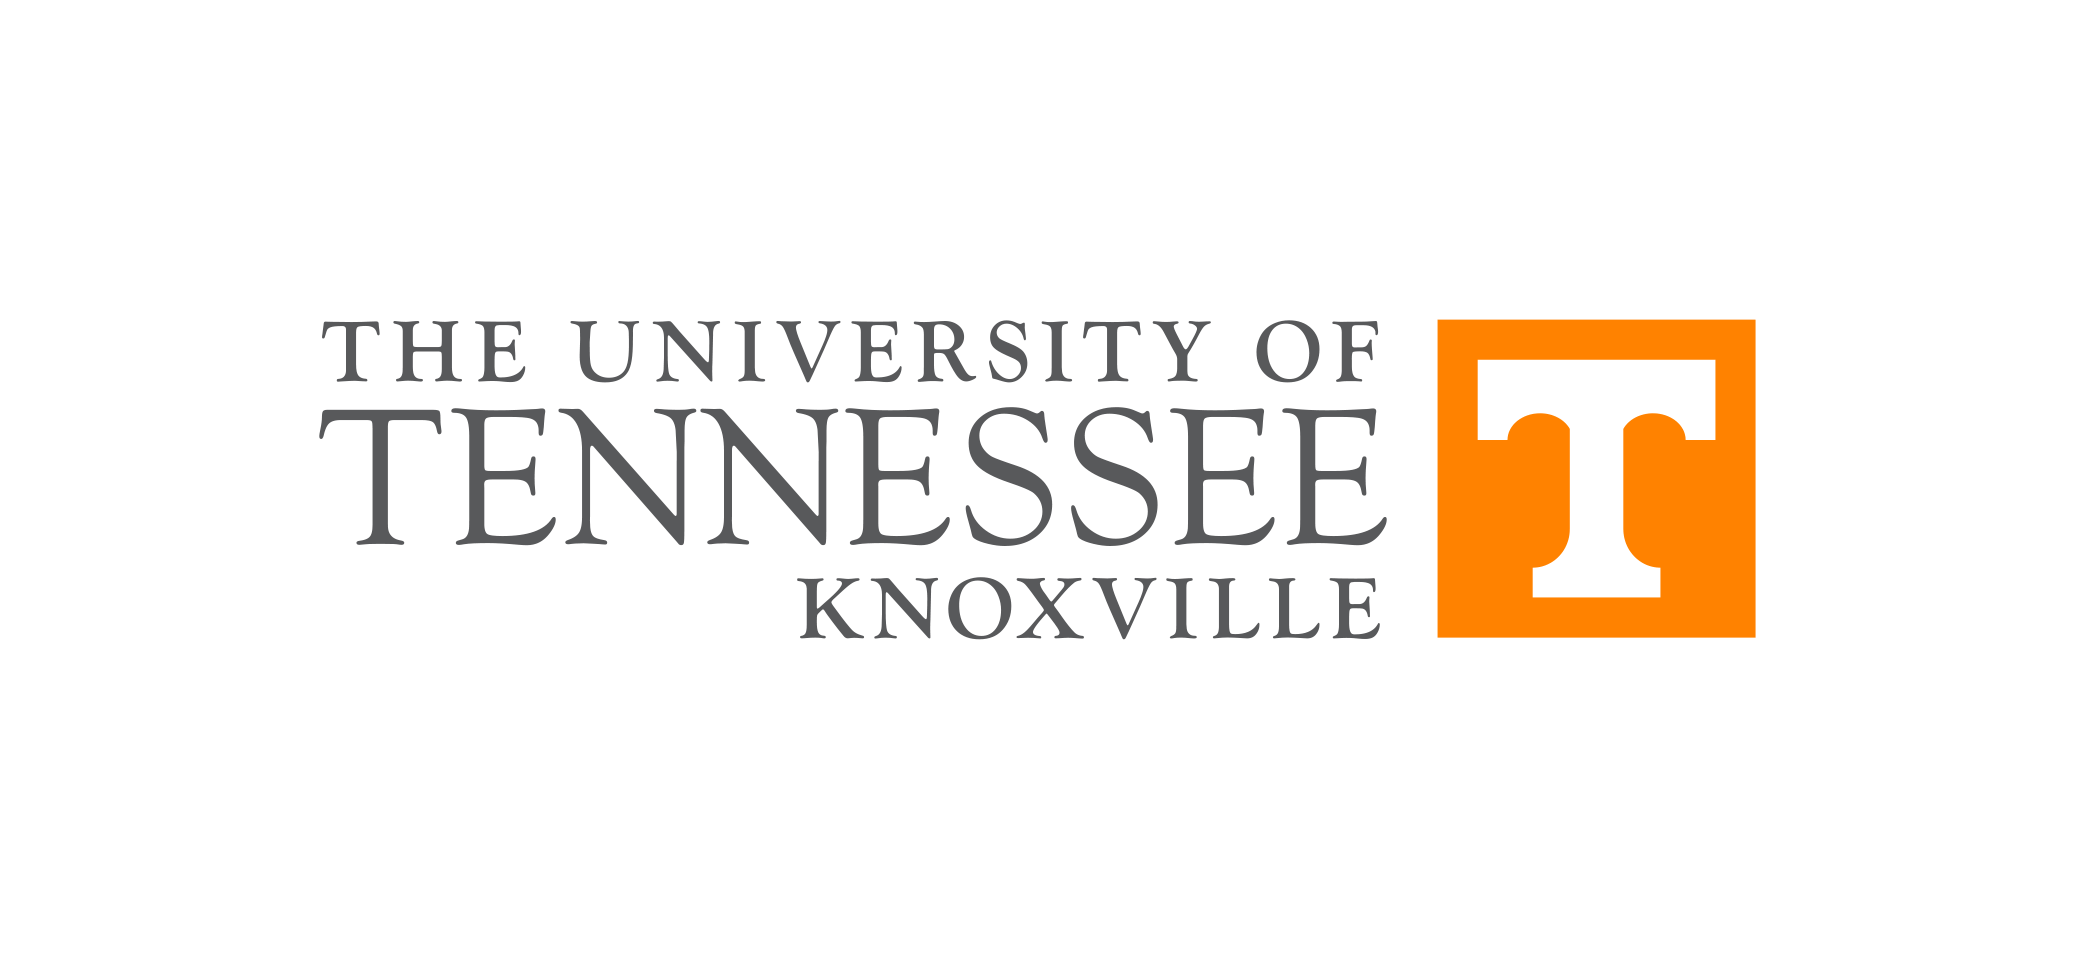 Utk Logo - The University of Tennessee Logo | Brand Guidelines